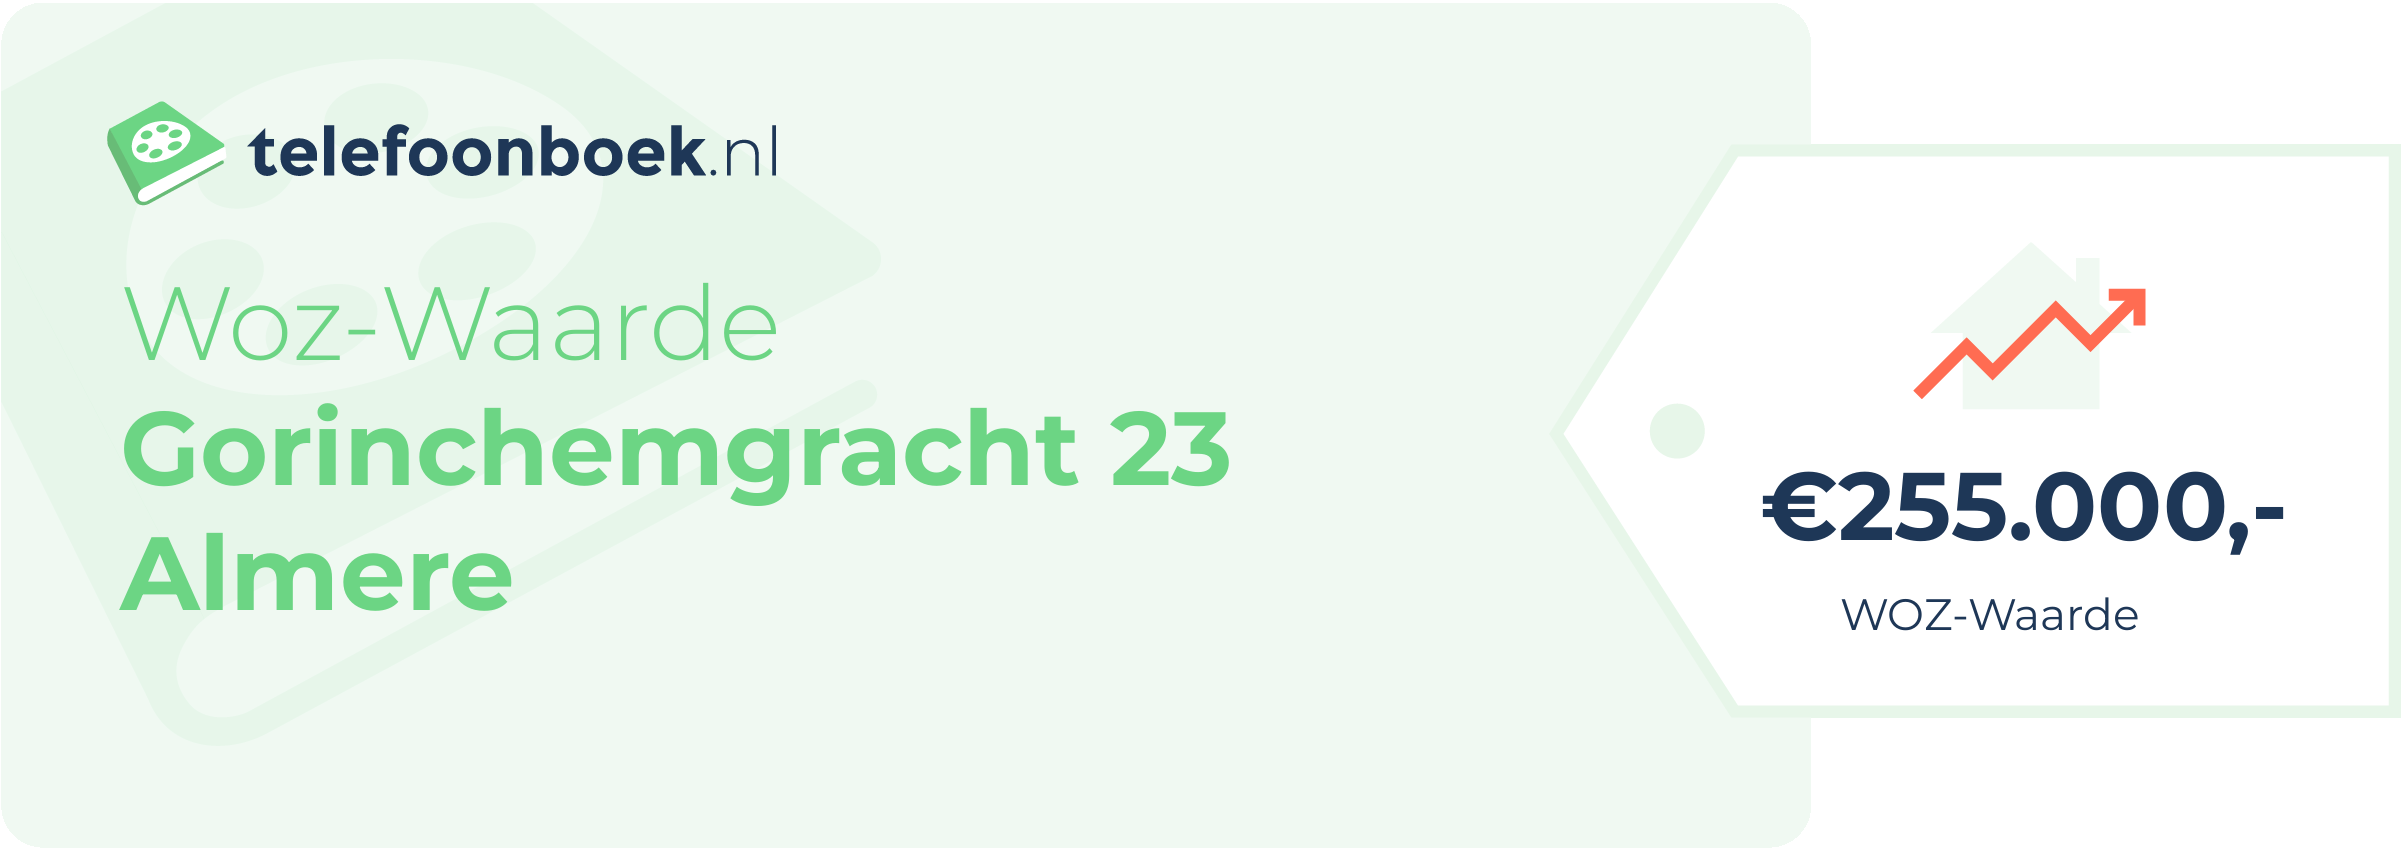 WOZ-waarde Gorinchemgracht 23 Almere